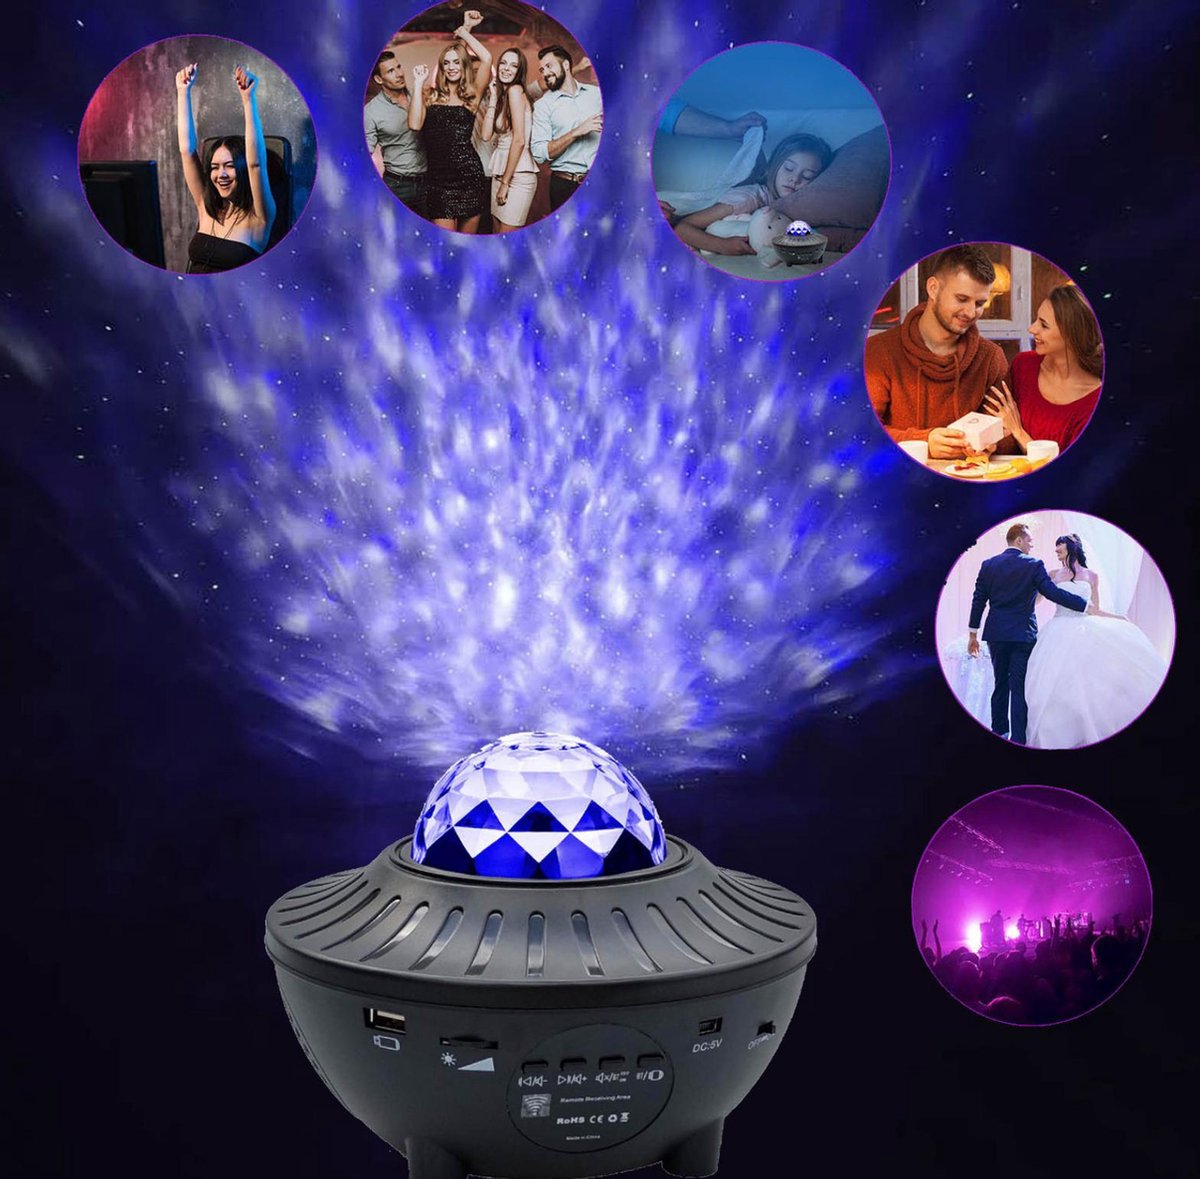 Disco Ball, Boule Disco LED Lumière Disco avec Motif Enétoile, 18